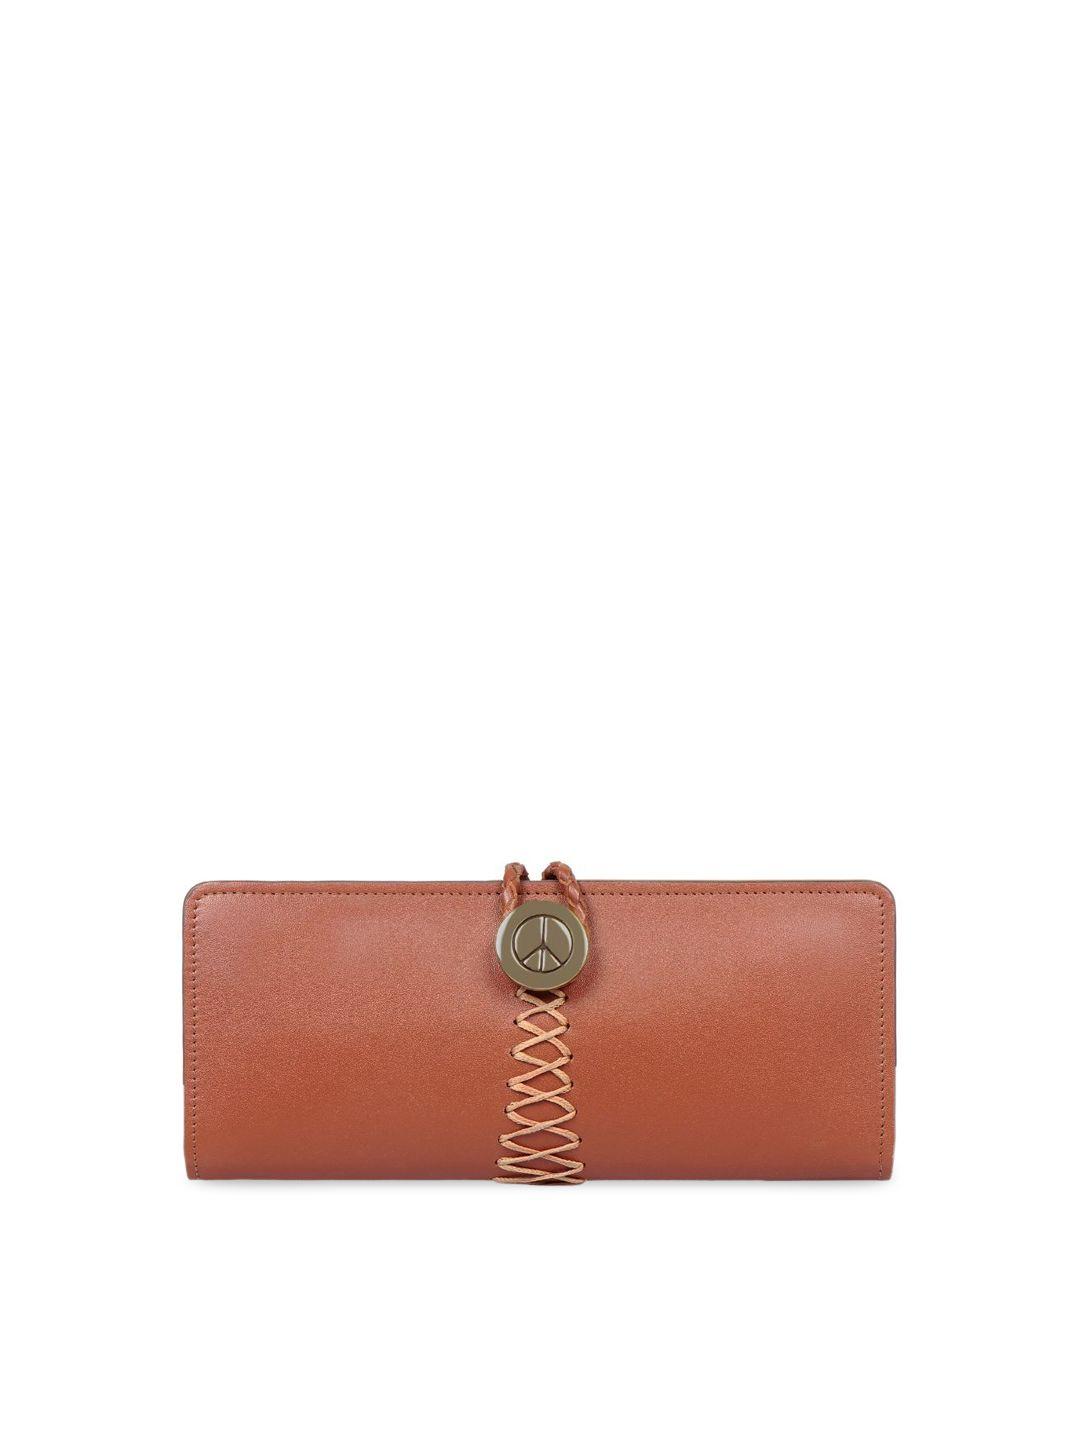 hidesign-tan-leather-purse-clutch